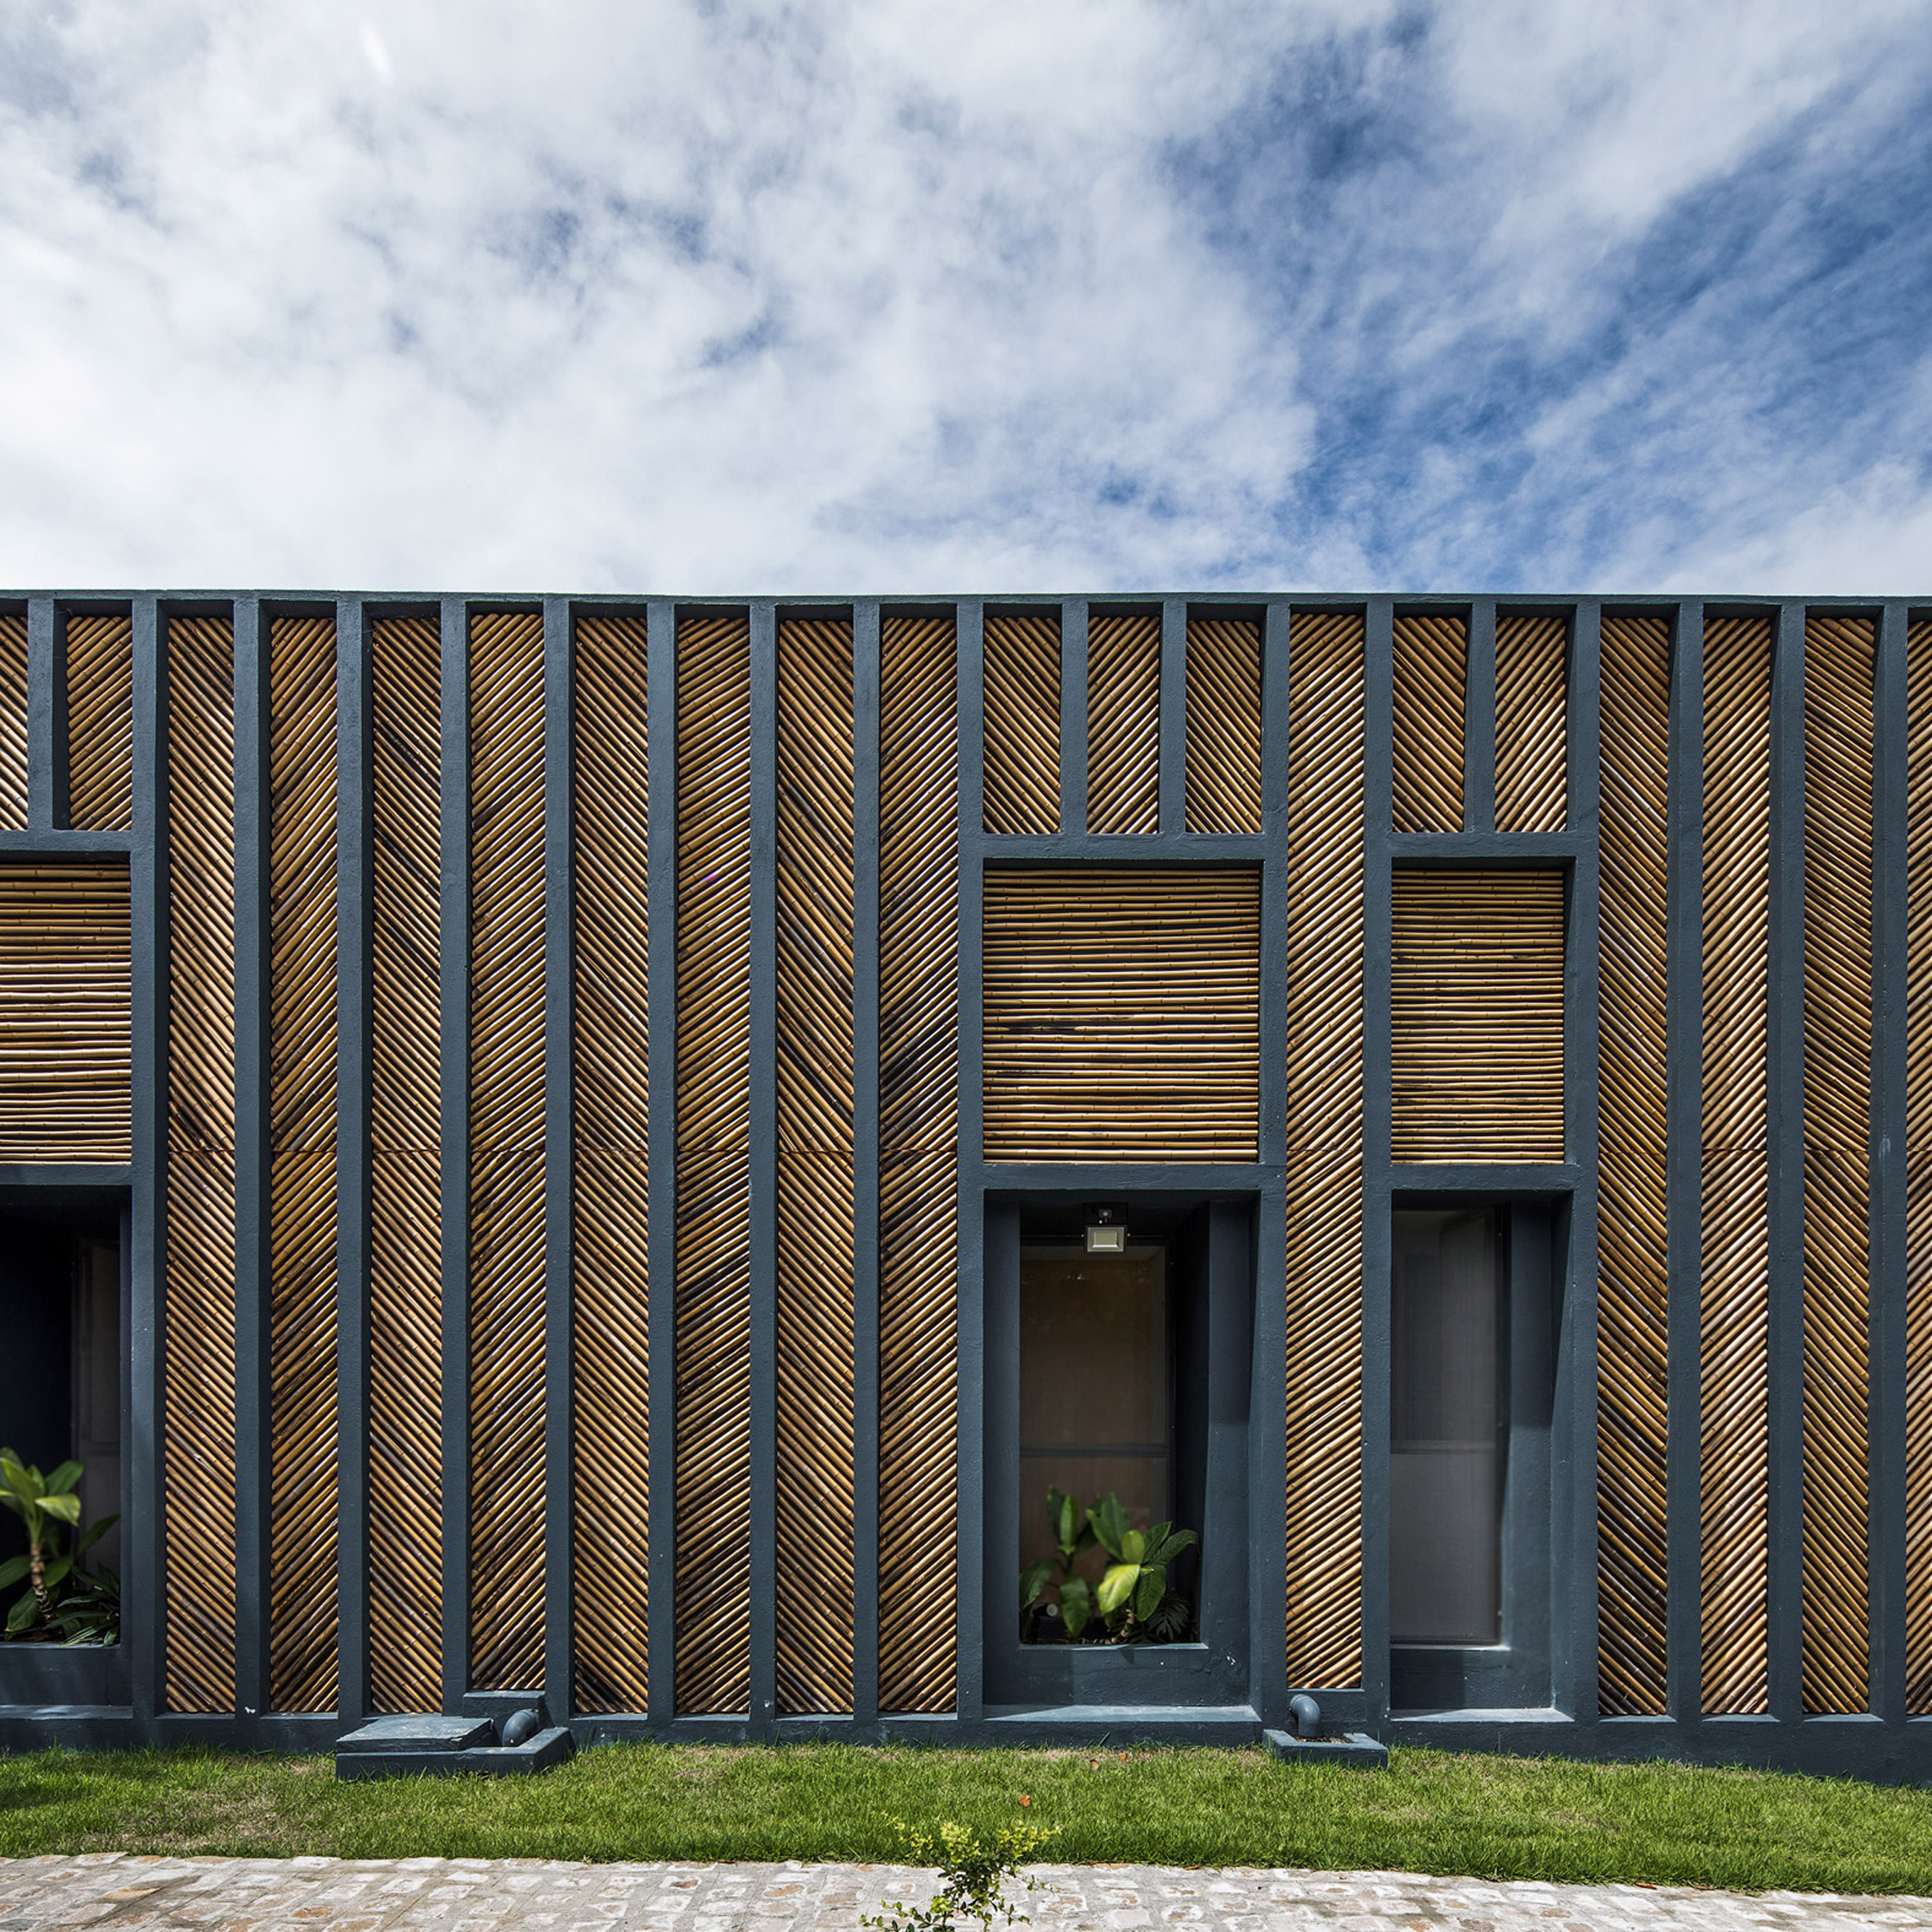 Vilela Florez Designs Bamboo House With Chevron Pattern Exterior In Brazil